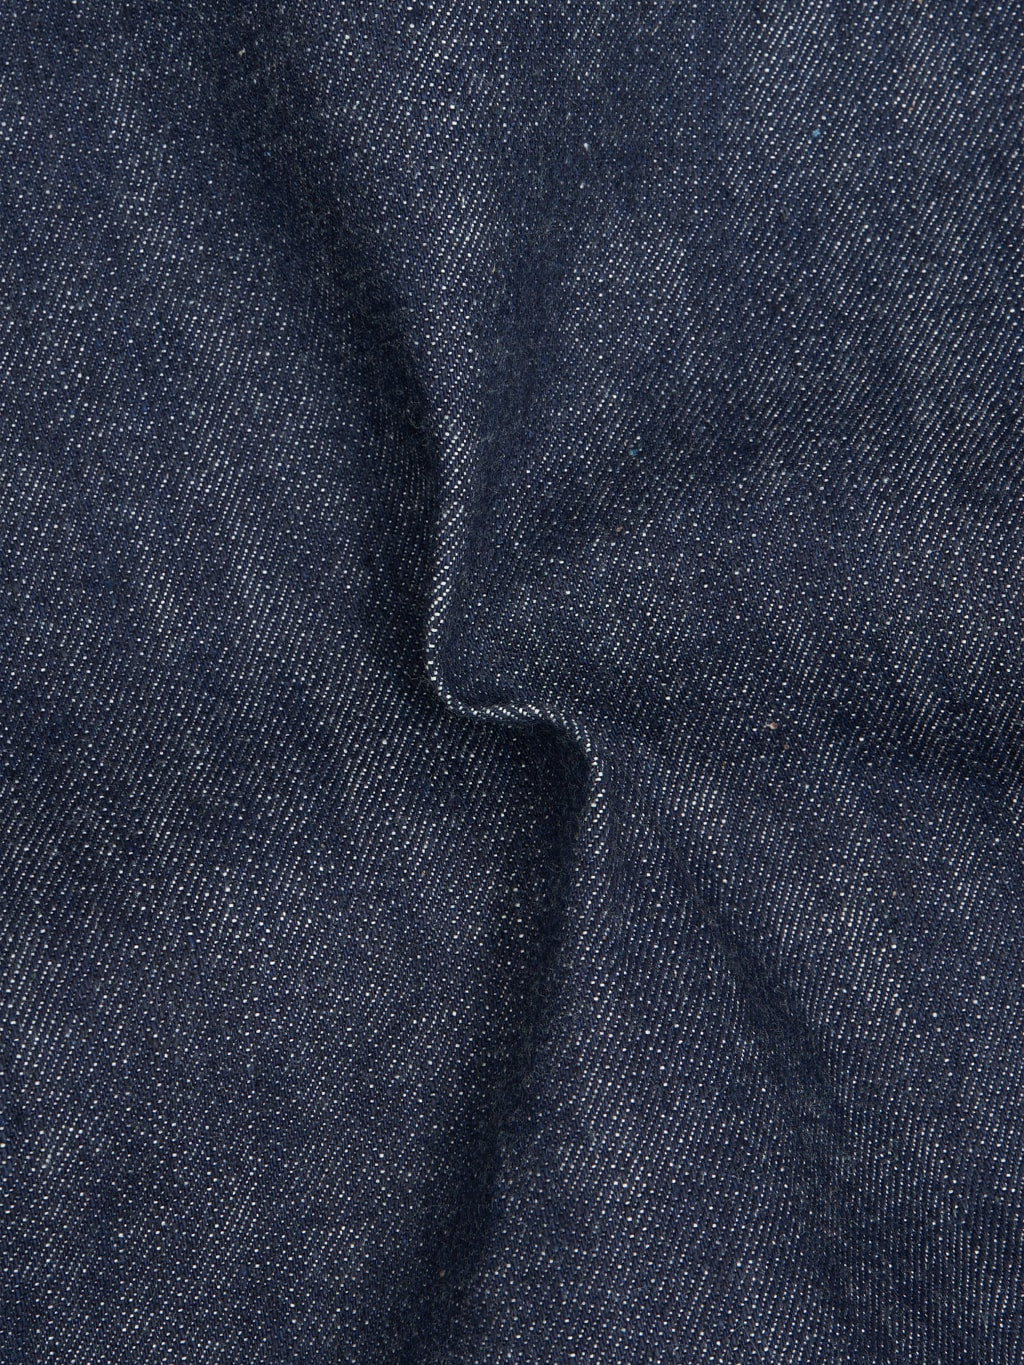 freenote cloth rj 313 ounce indigo selvedge denim jacket  texture